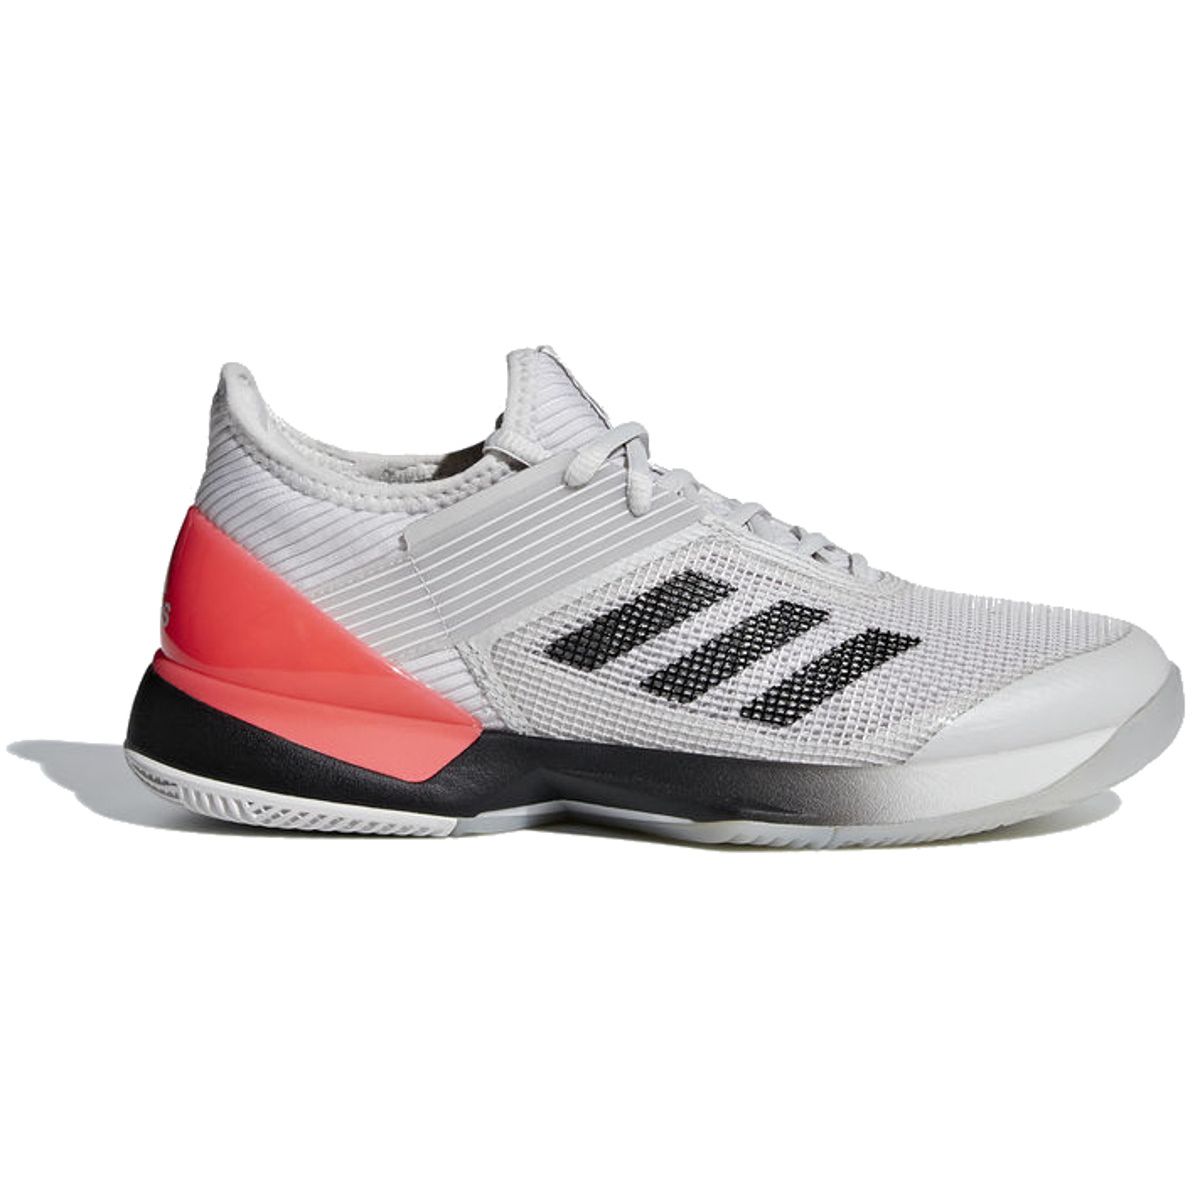 adidas Adizero Ubersonic 3.0 Women's Tennis Shoes AH2137